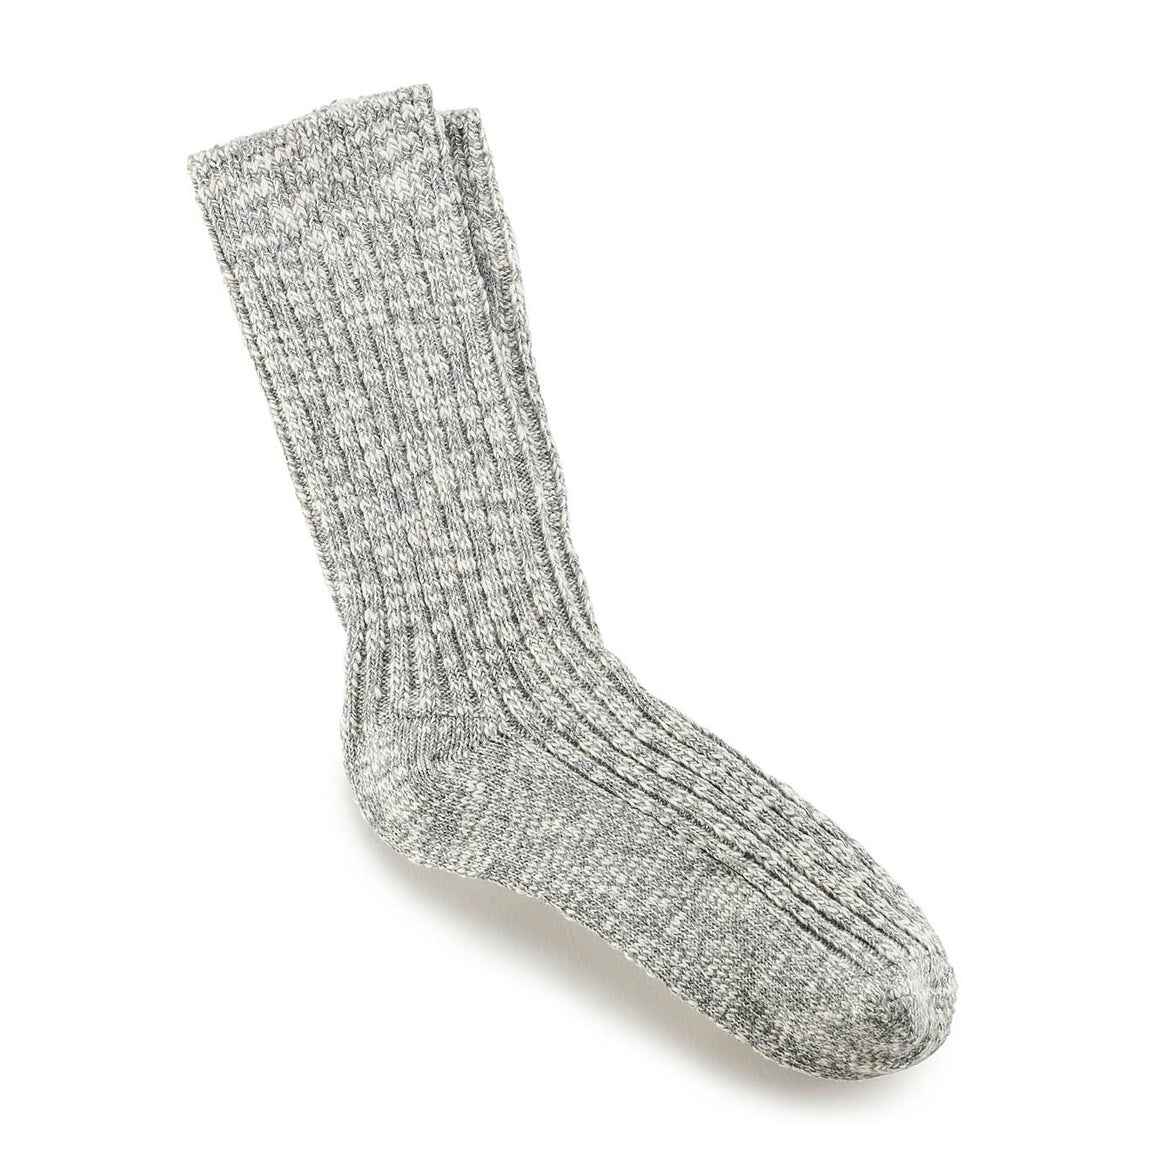 Birkenstock Women's Fashion Slub Socks - Gray White 1002436 - ShoeShackOnline